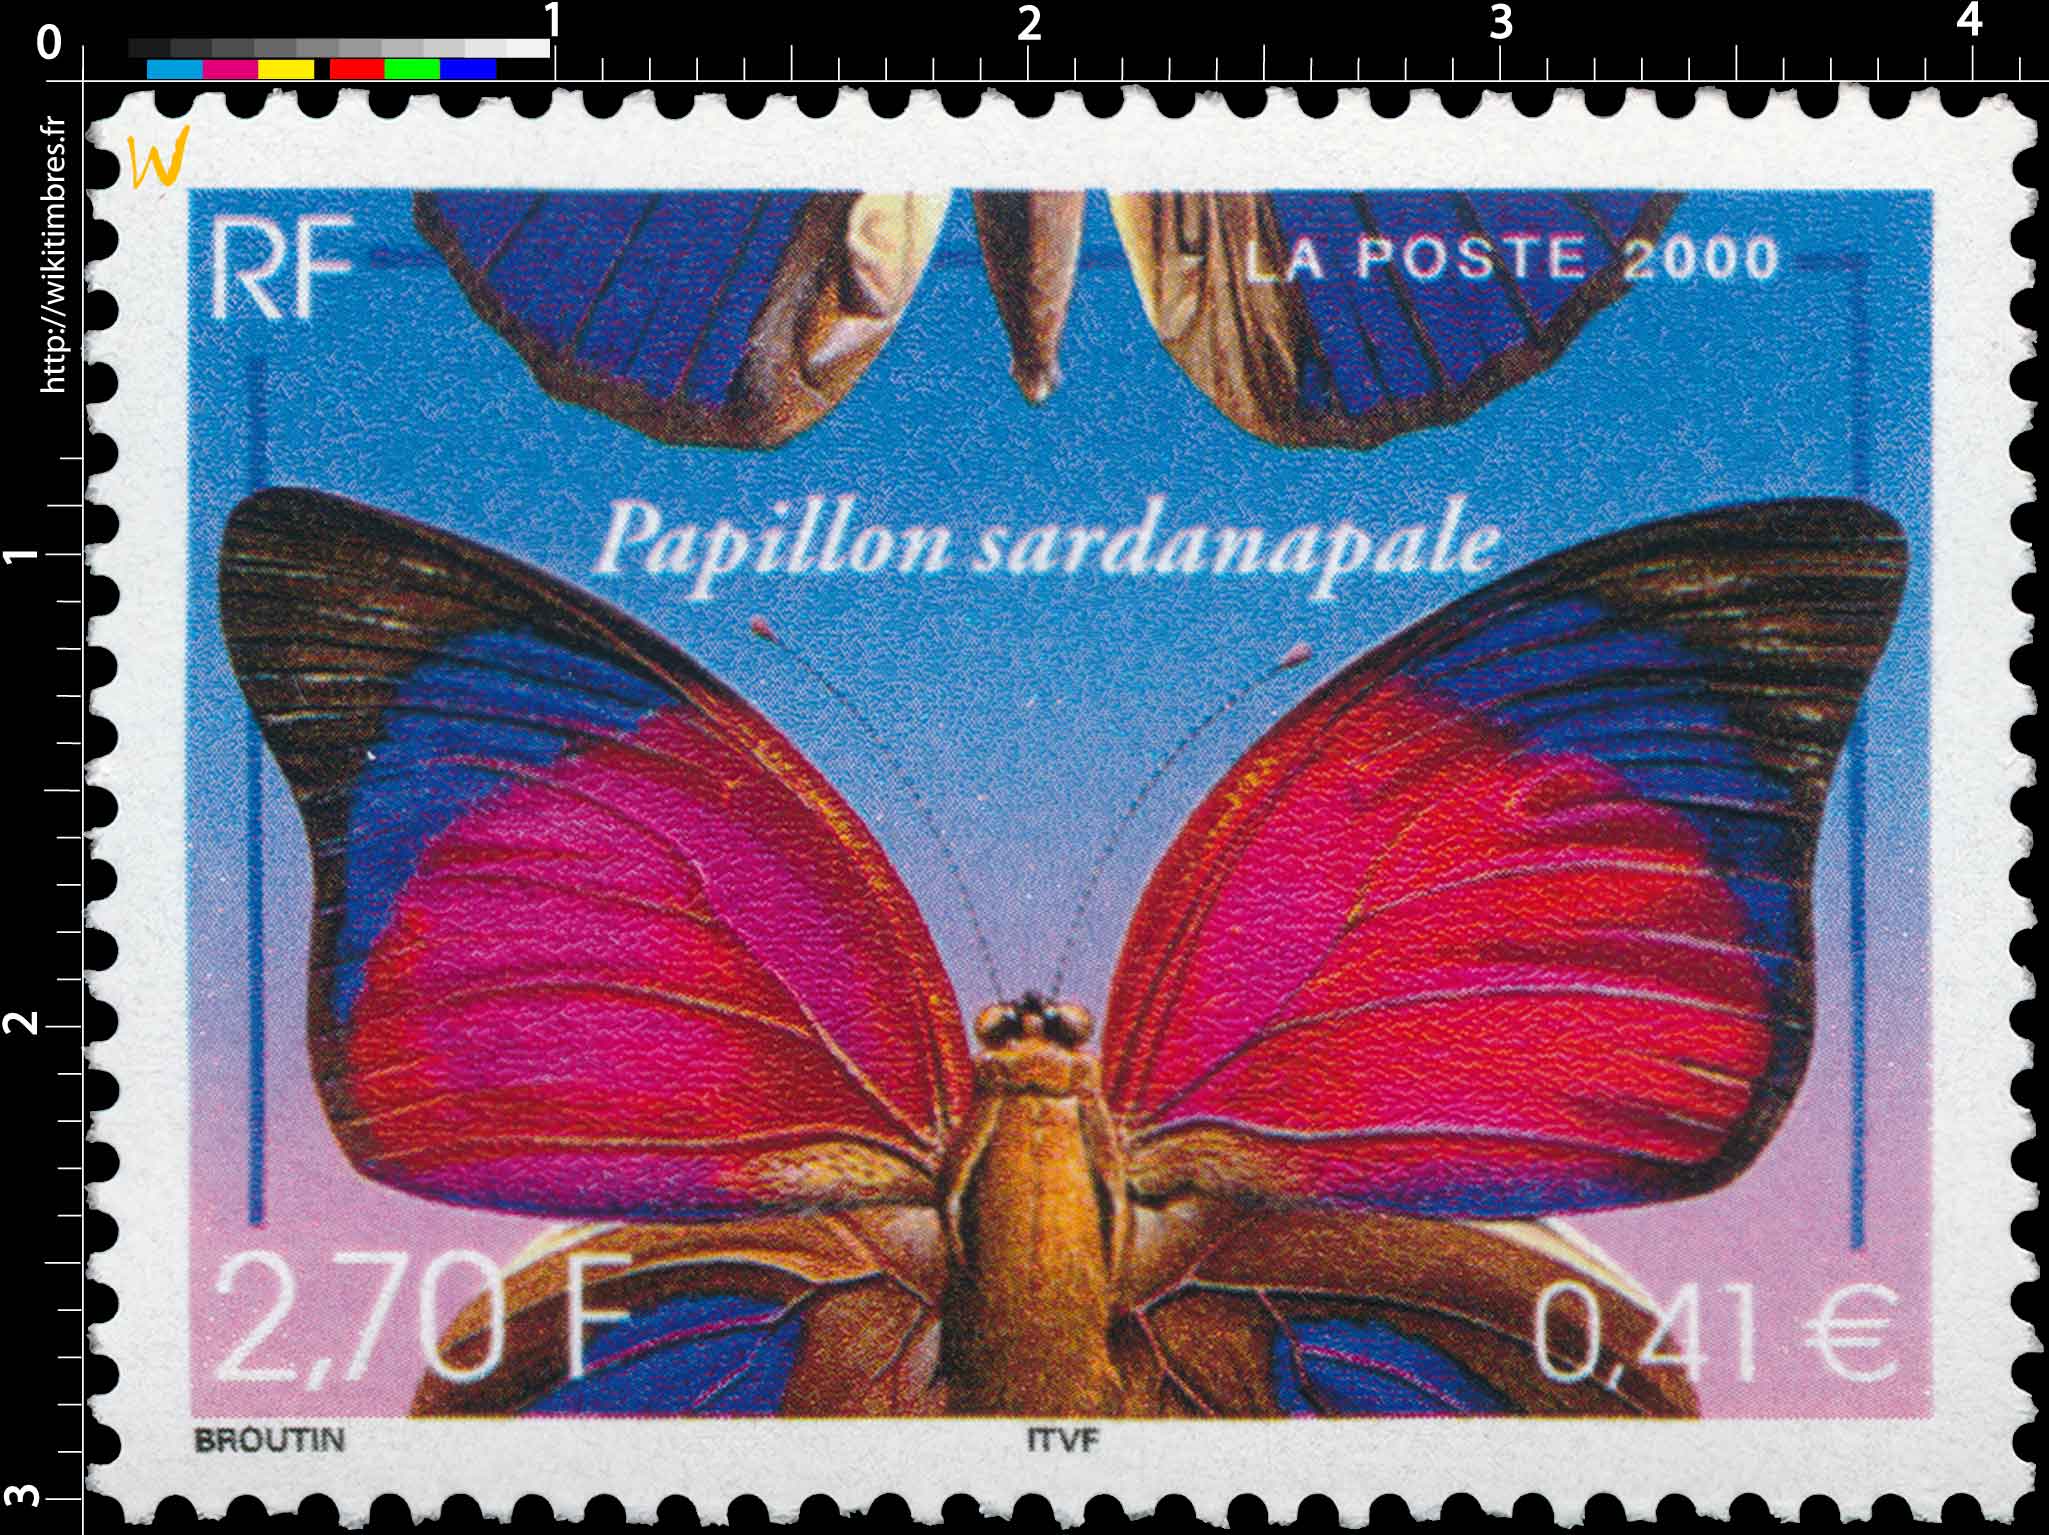 2000 Papillon sardanapale